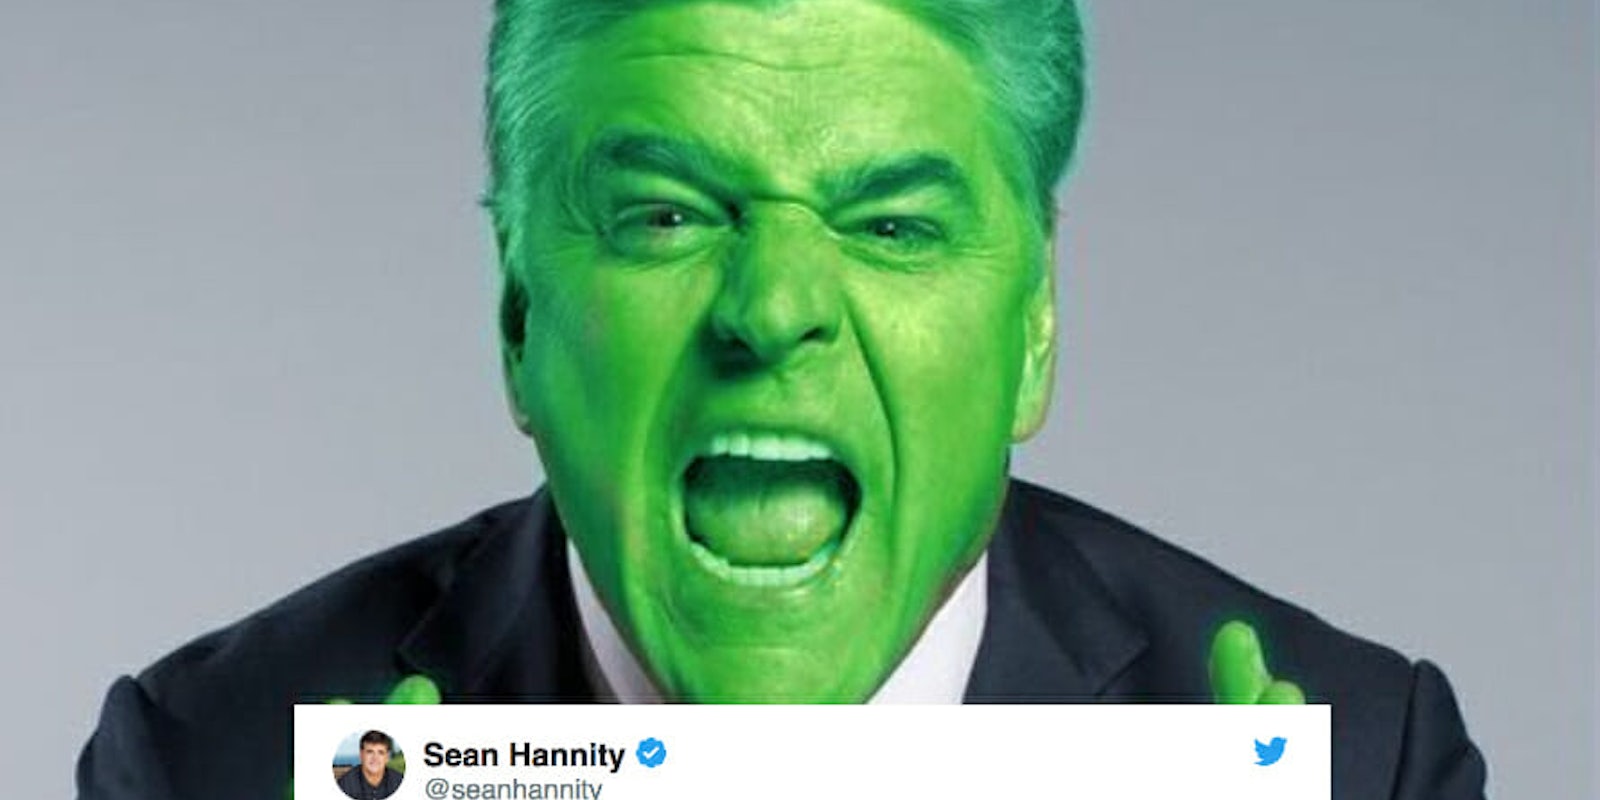 Sean Hannity green meme